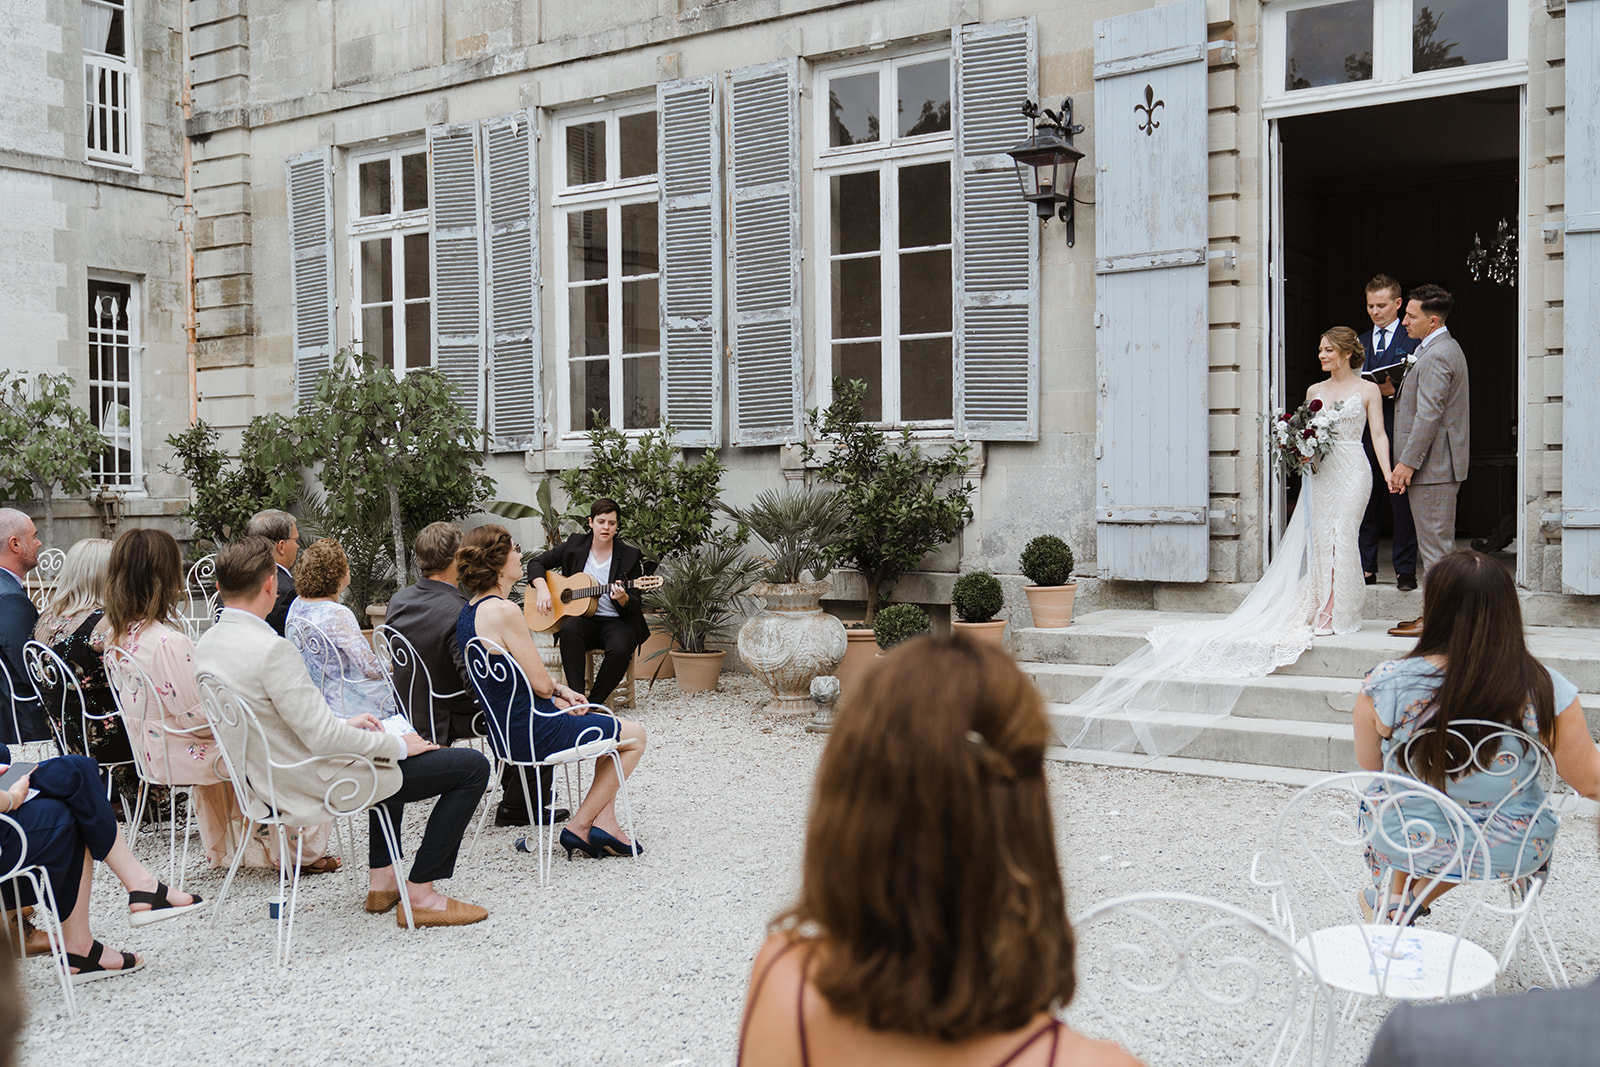 Getting Married at a Chateau near Paris